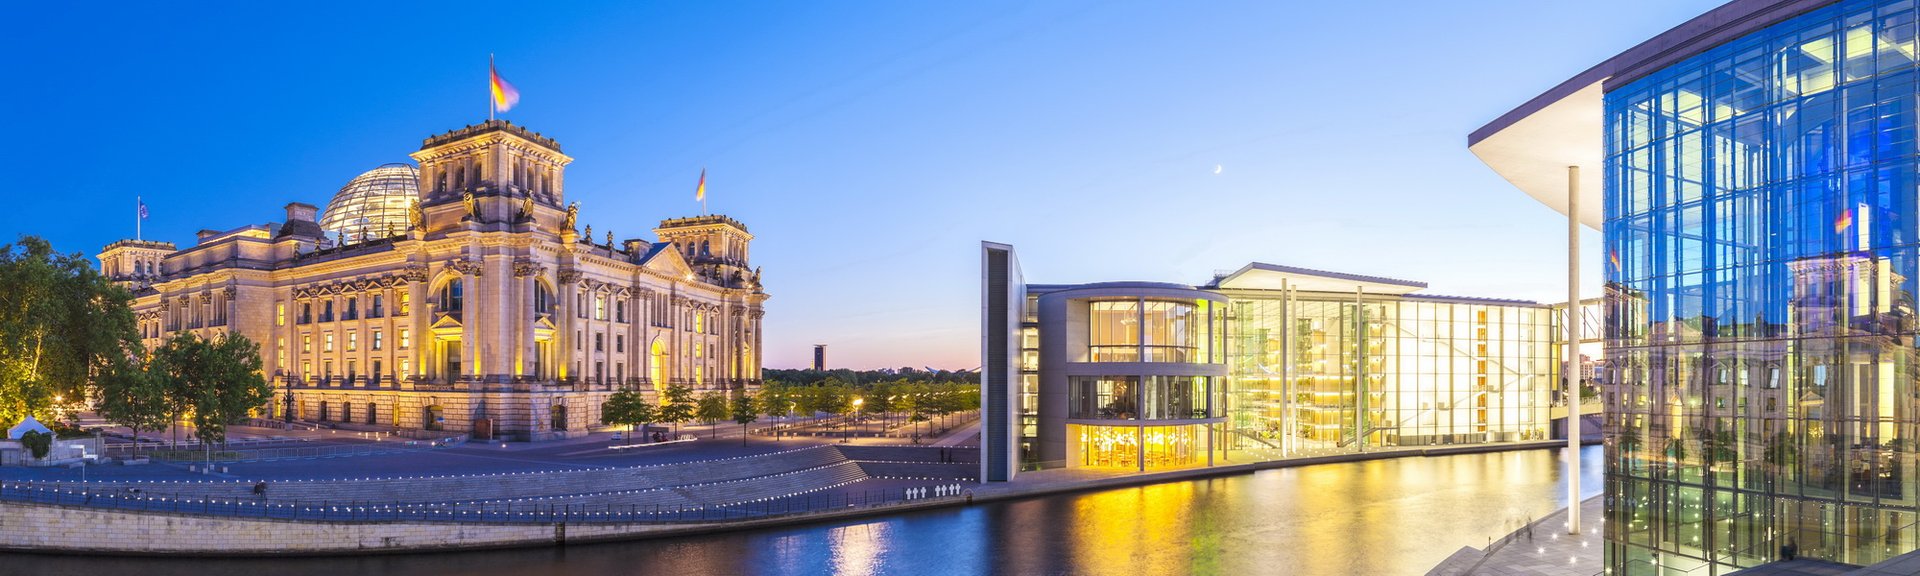 Berlino in dettaglio – Berlino-Mitte in sintesi